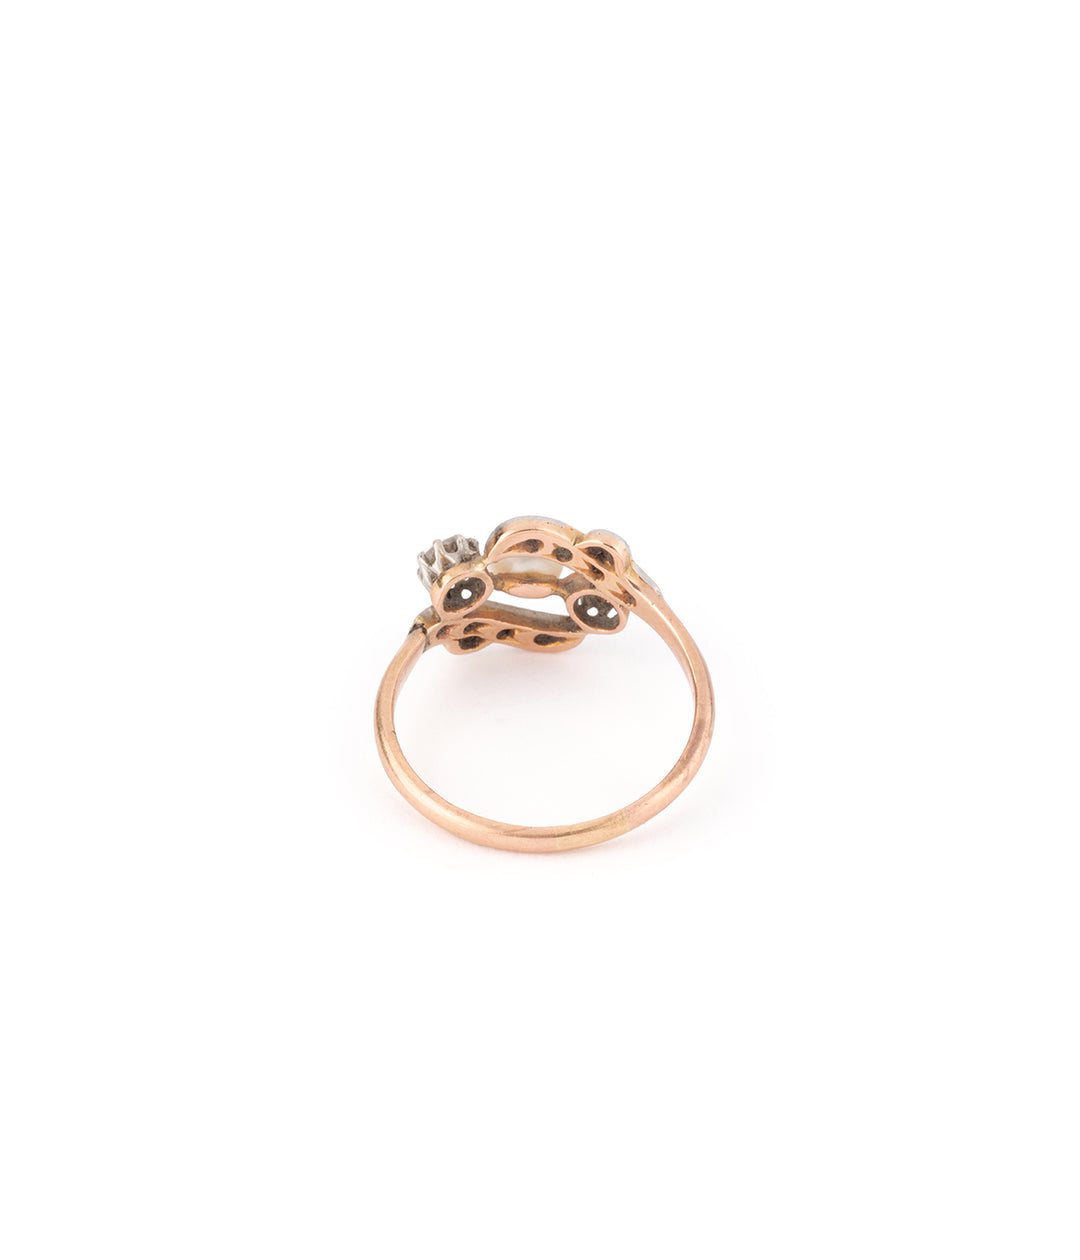 Antique pearl diamond engagement ring "Elena" - Caillou Paris 